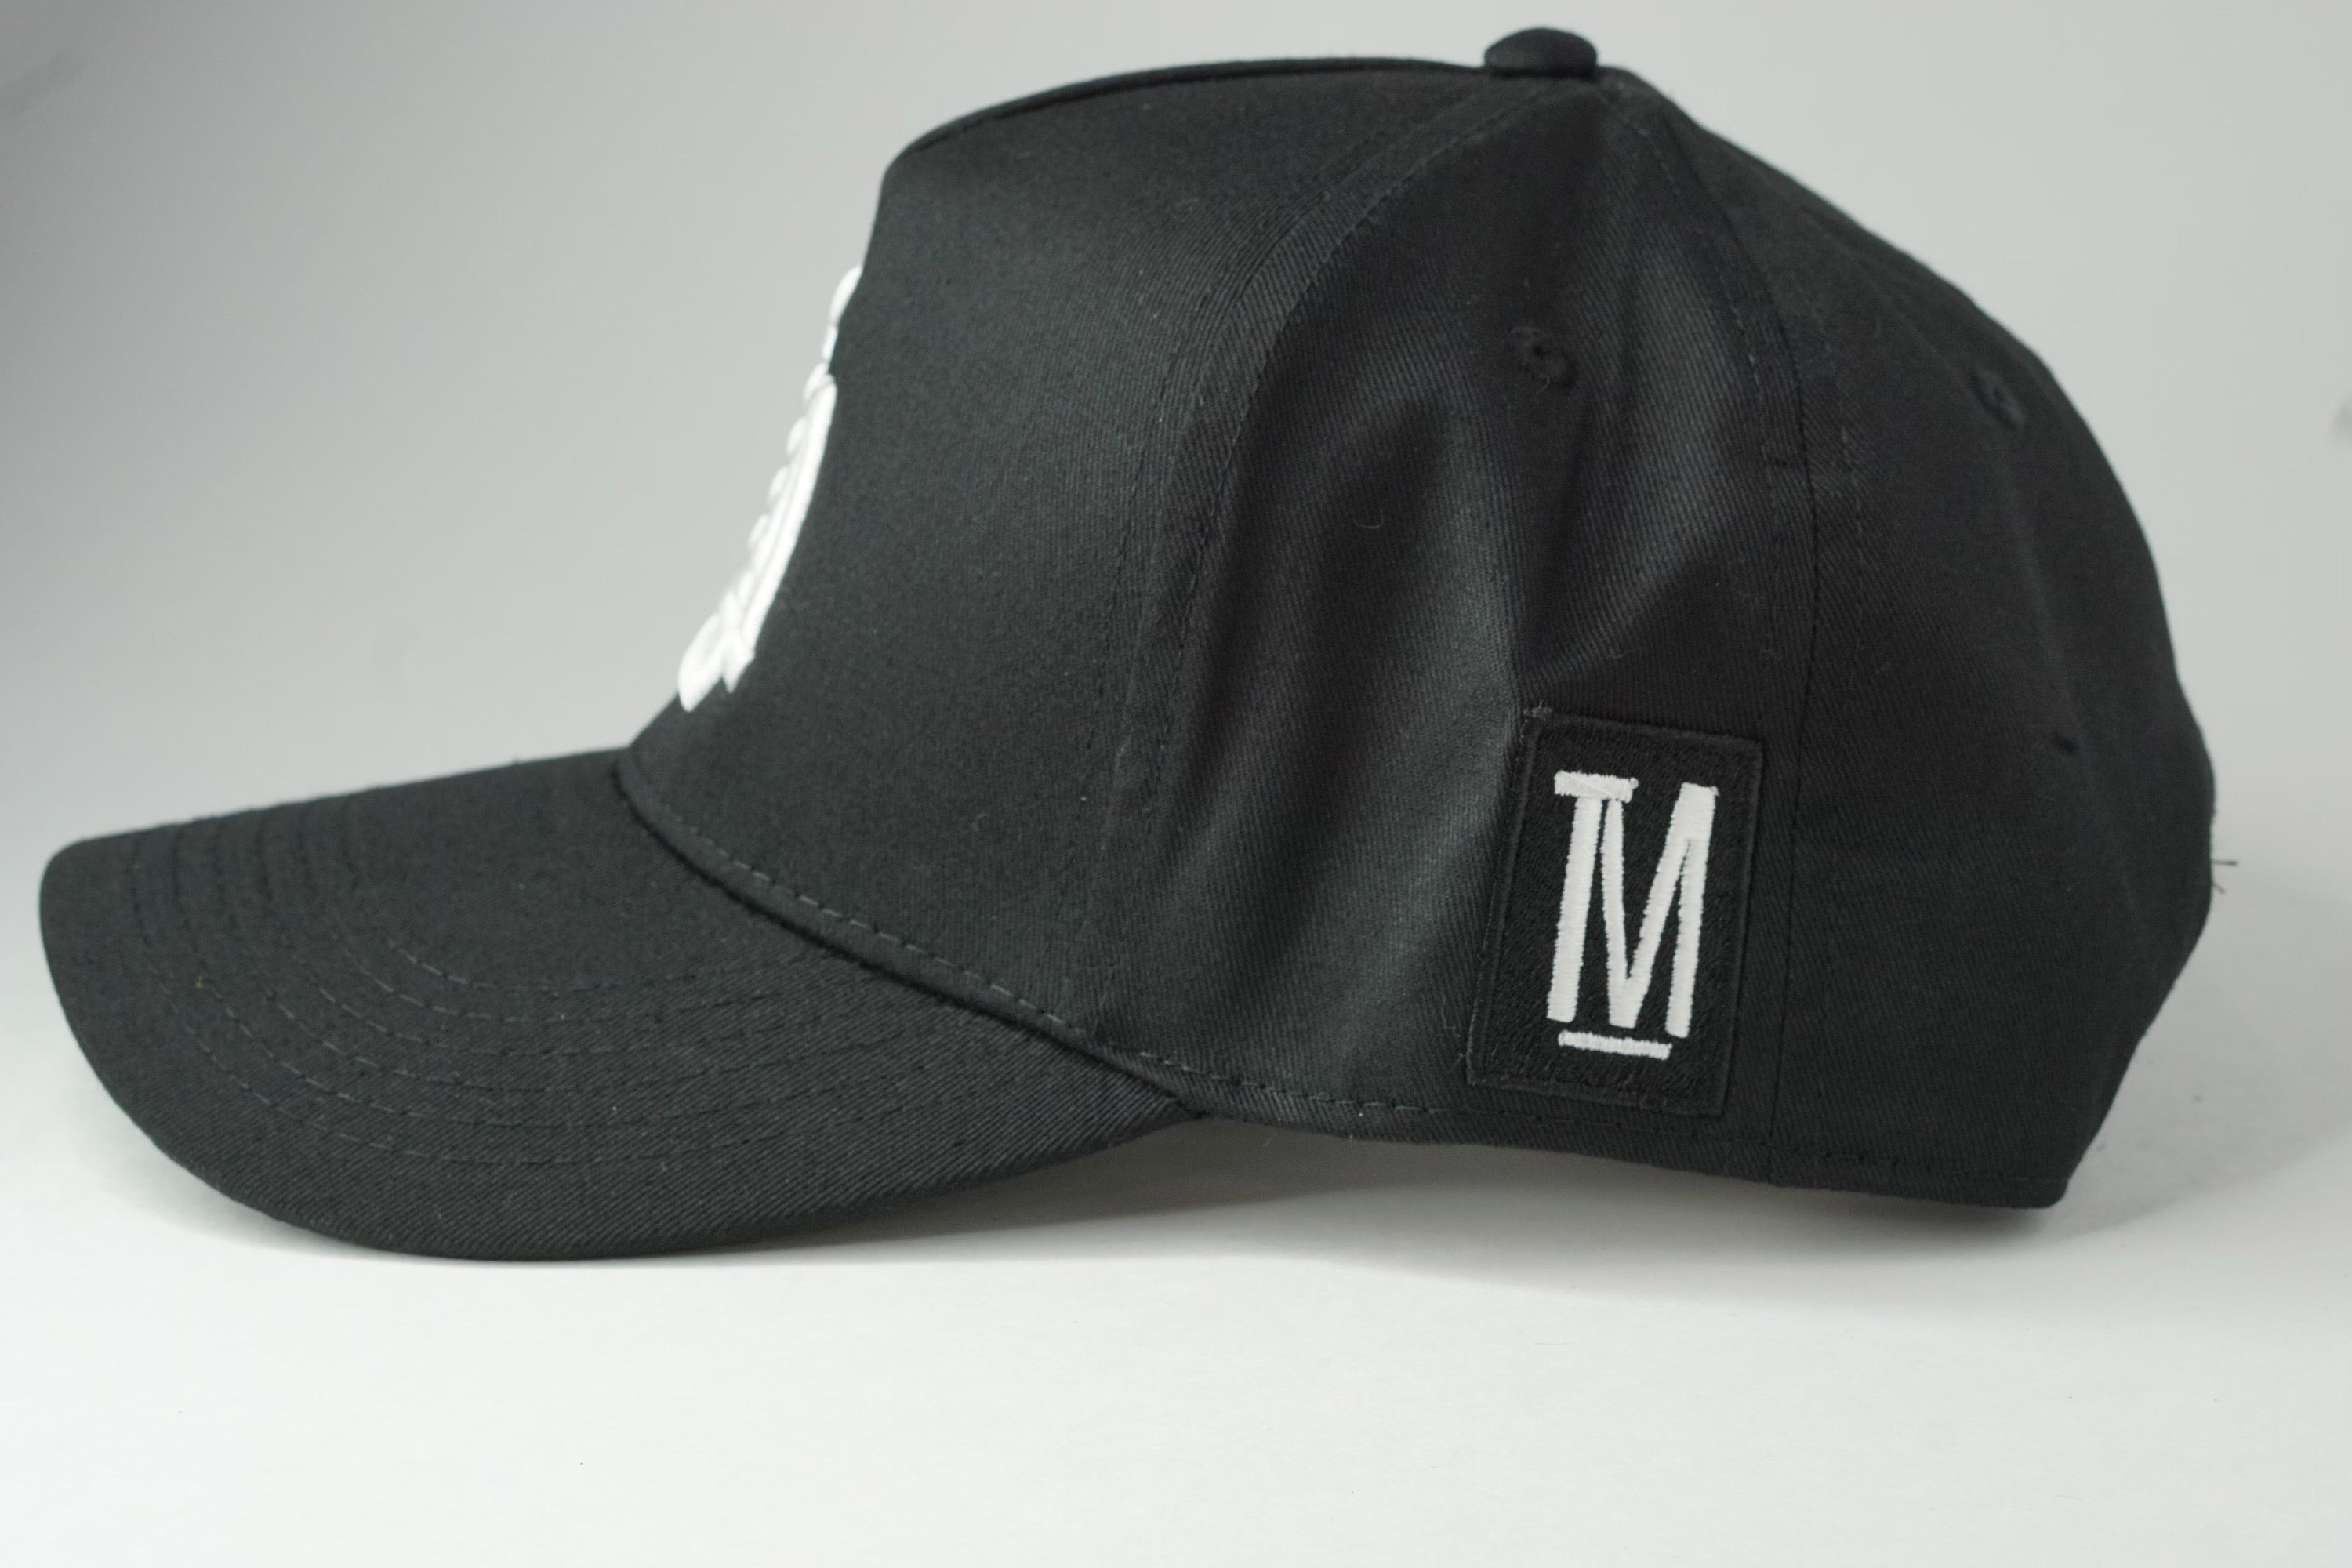 Midnight Black LA snapback hat